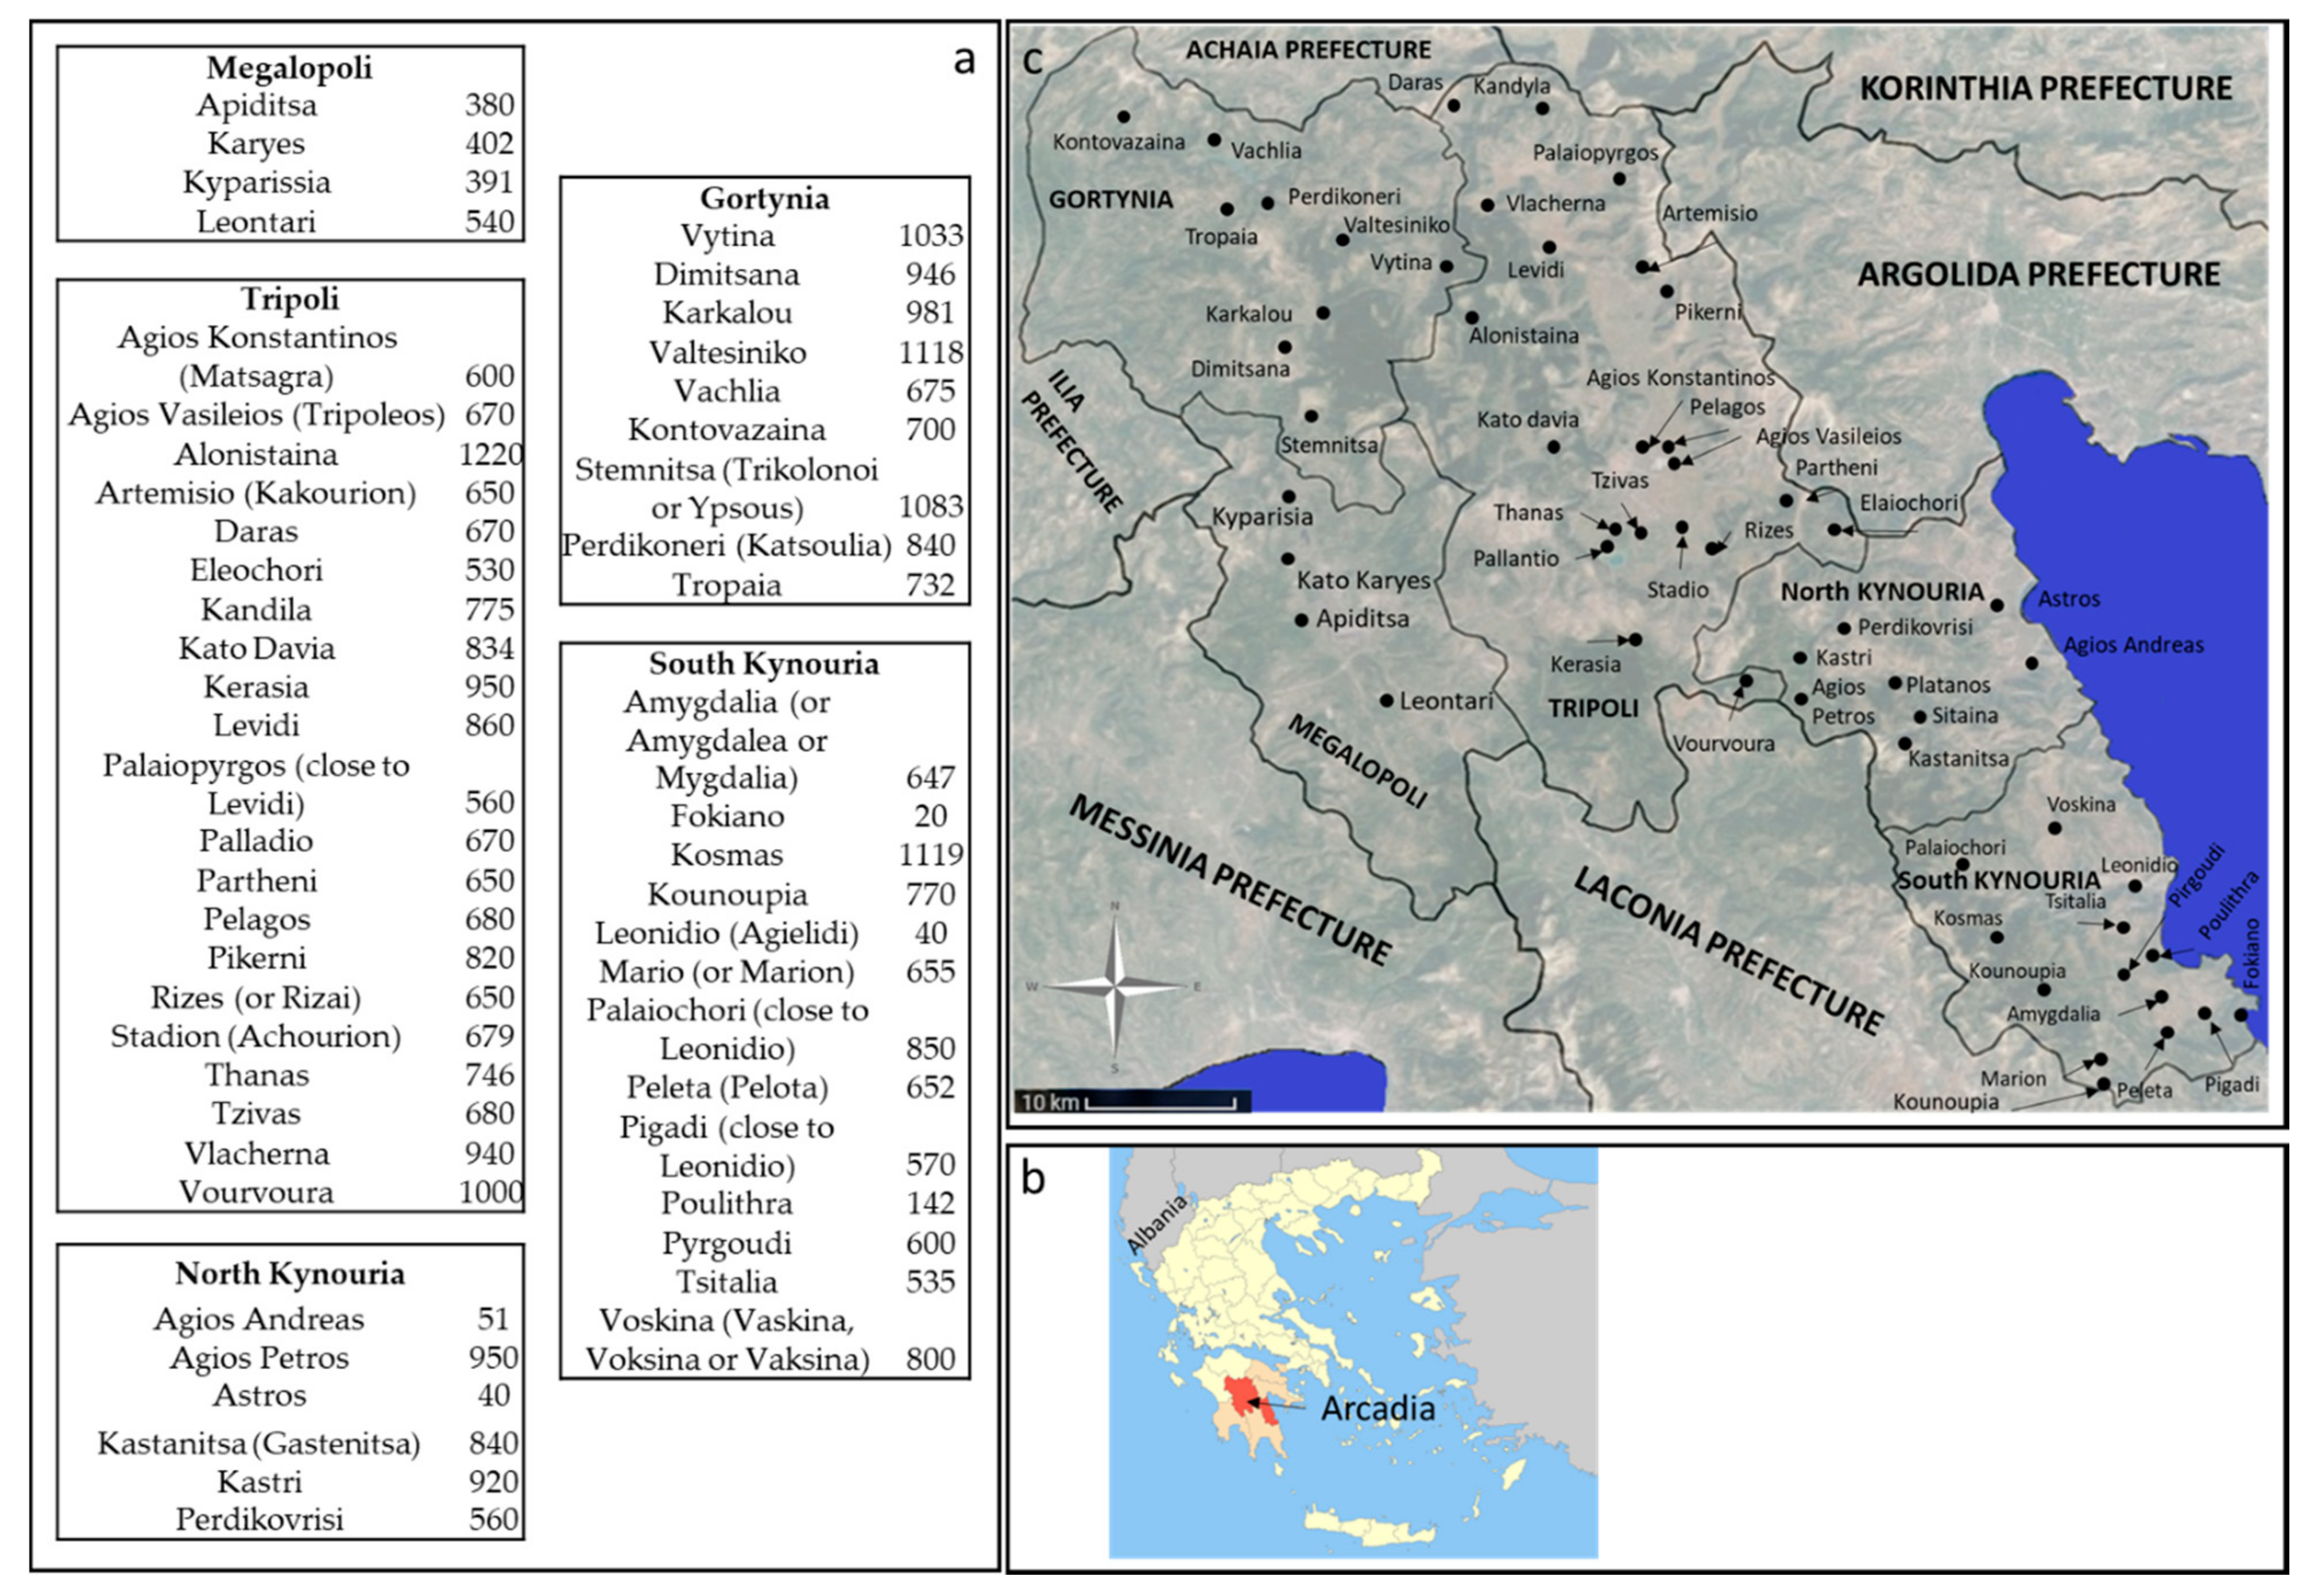 Palmer amaranth biotypes location in Greece.